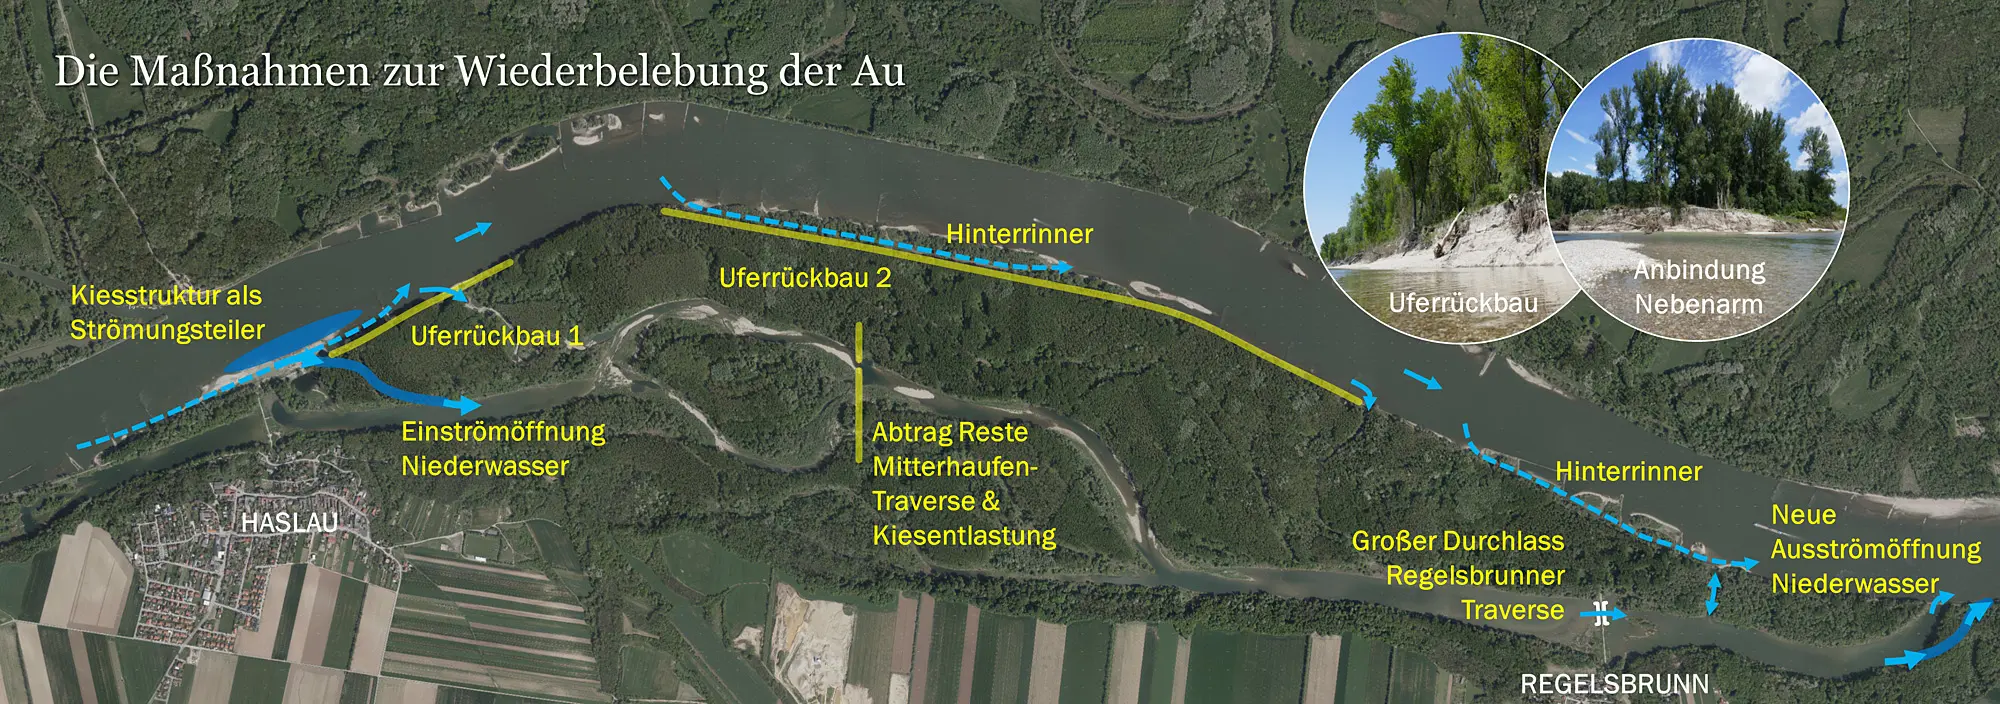 Maßnahmenkonzept Gewässervernetzung Haslau-Regelsbrunn lt. Vorplanung, Quelle: viadonau